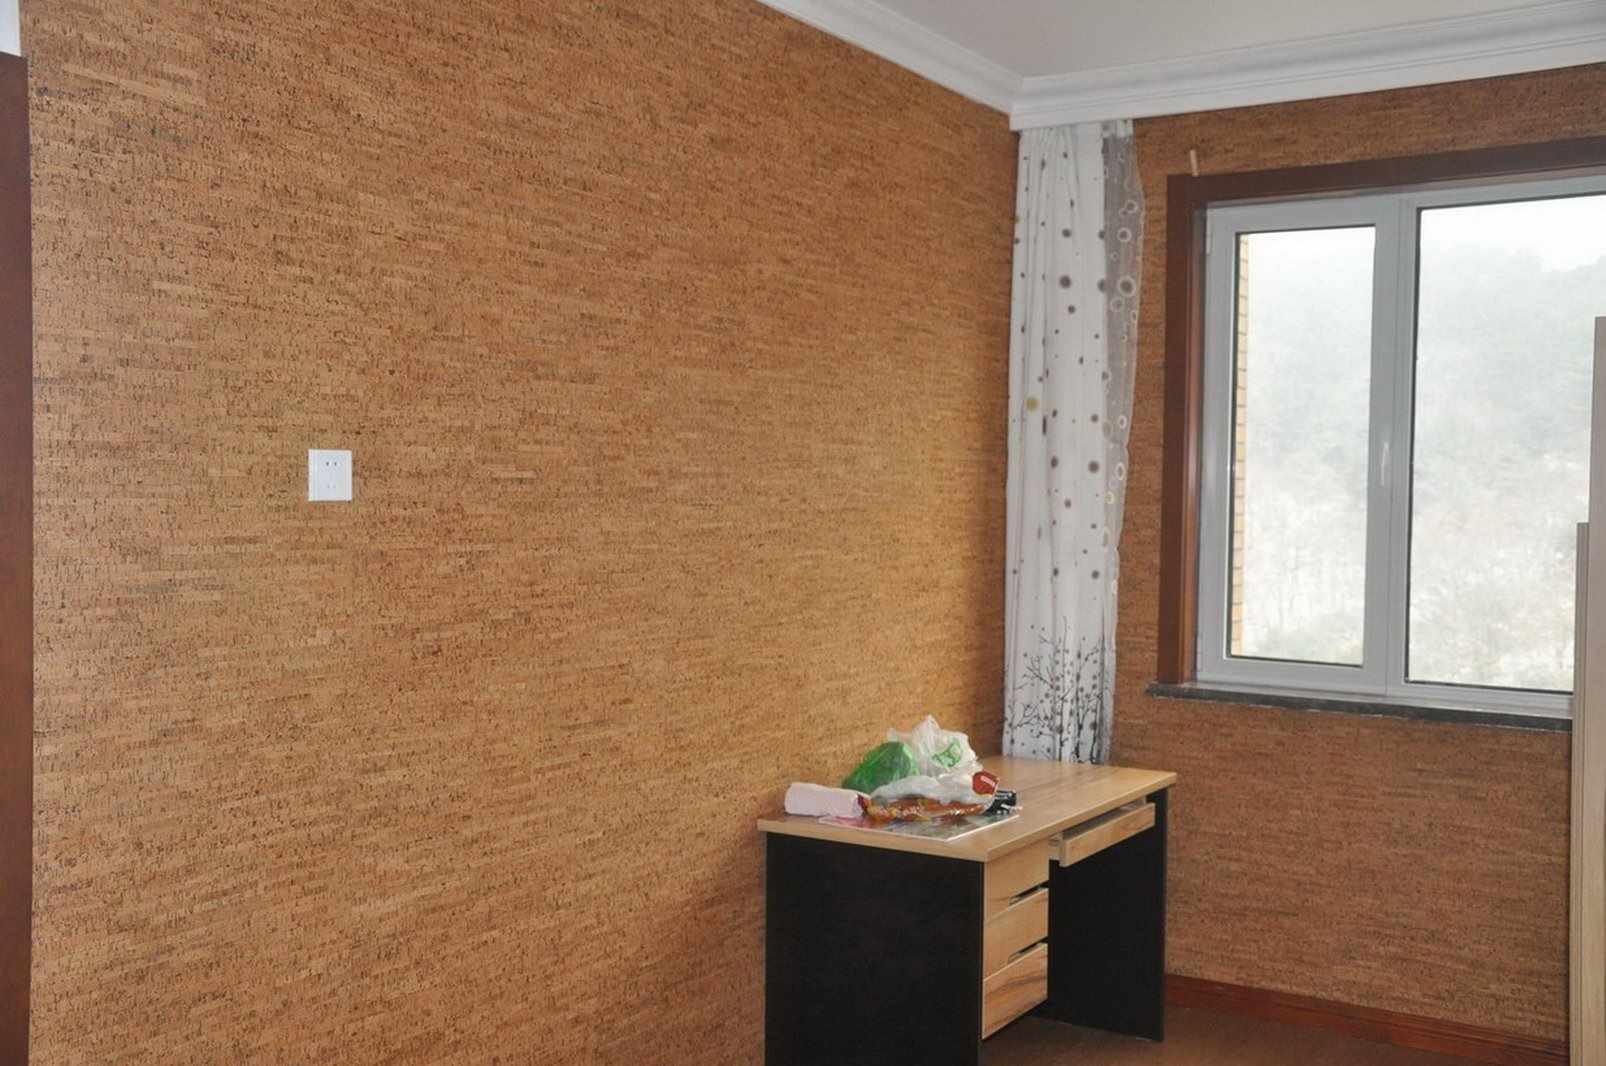 cork application in home design